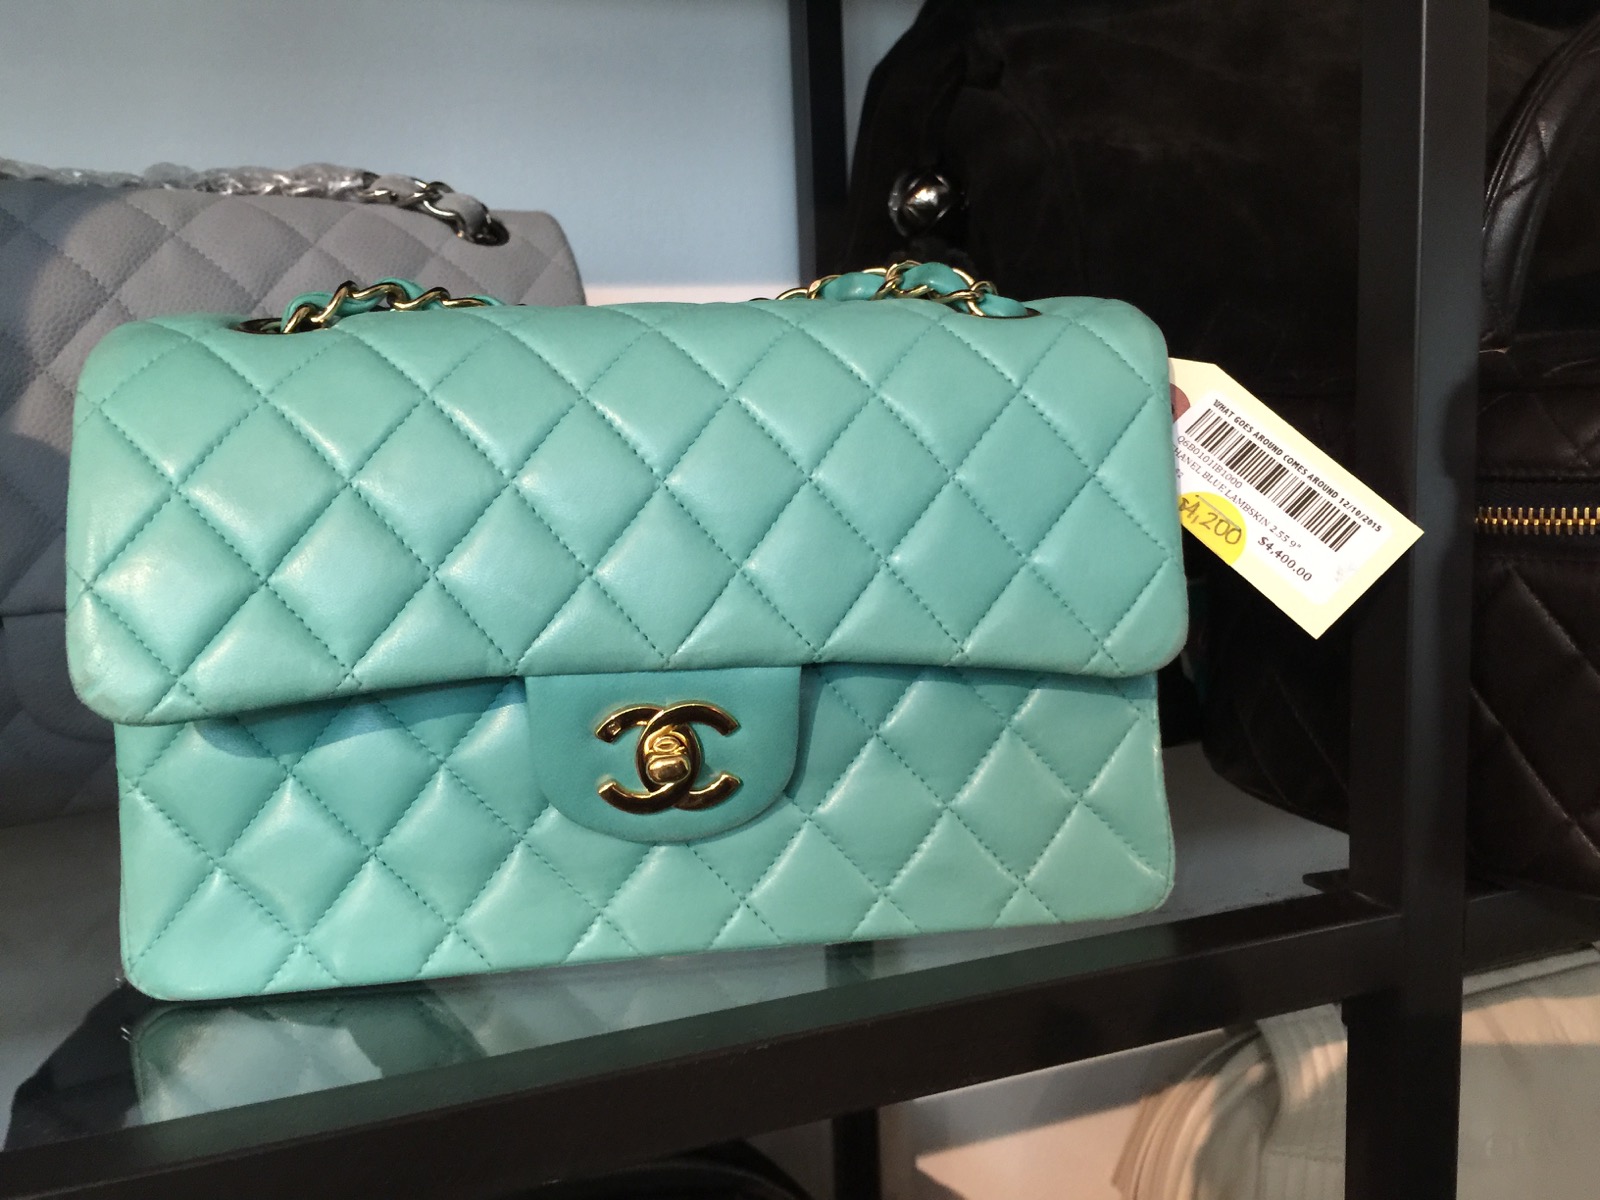 Chanel Shell Bag Costs $48,000 - Crazy Fashion